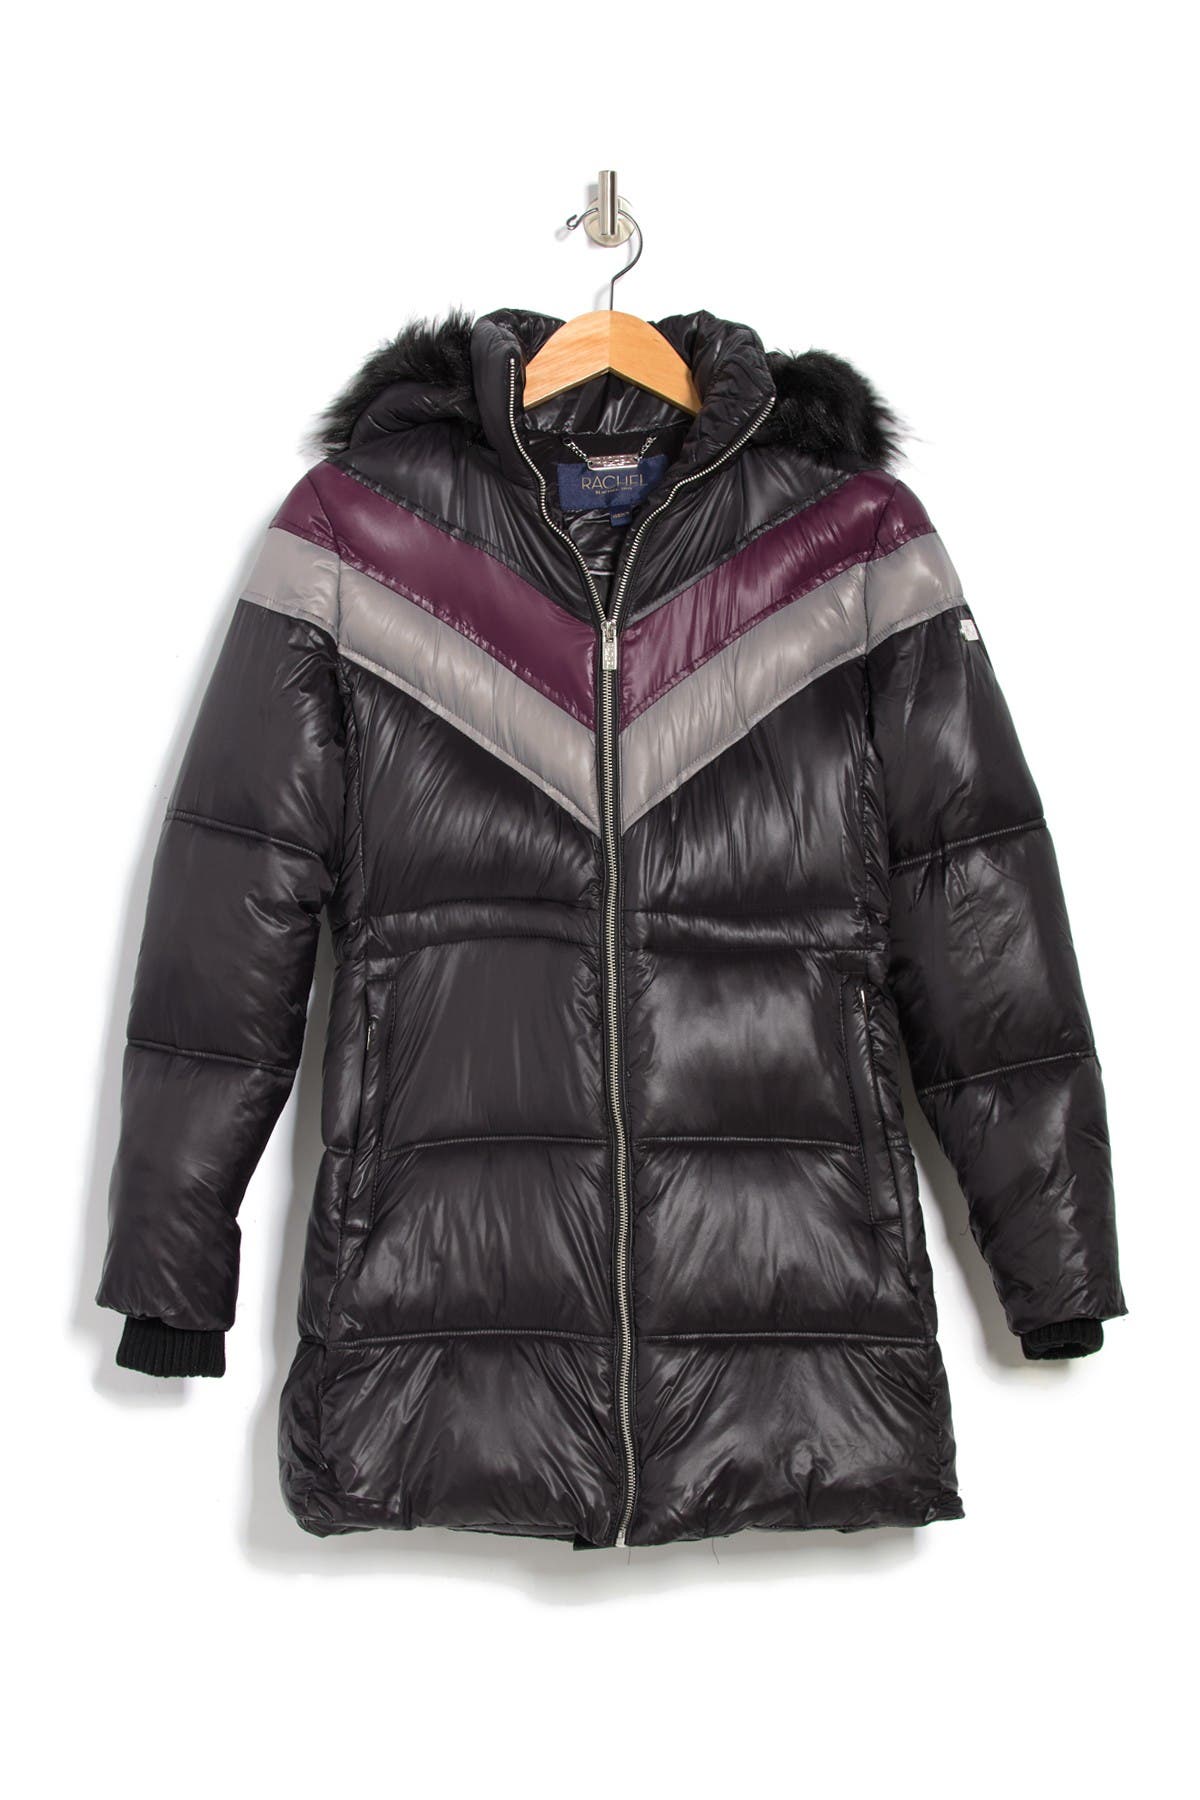 Rachel Rachel Roy Colorblock Faux Fur Hood Puffer Jacket, Size Med - Black Multi at Nordstrom Rack